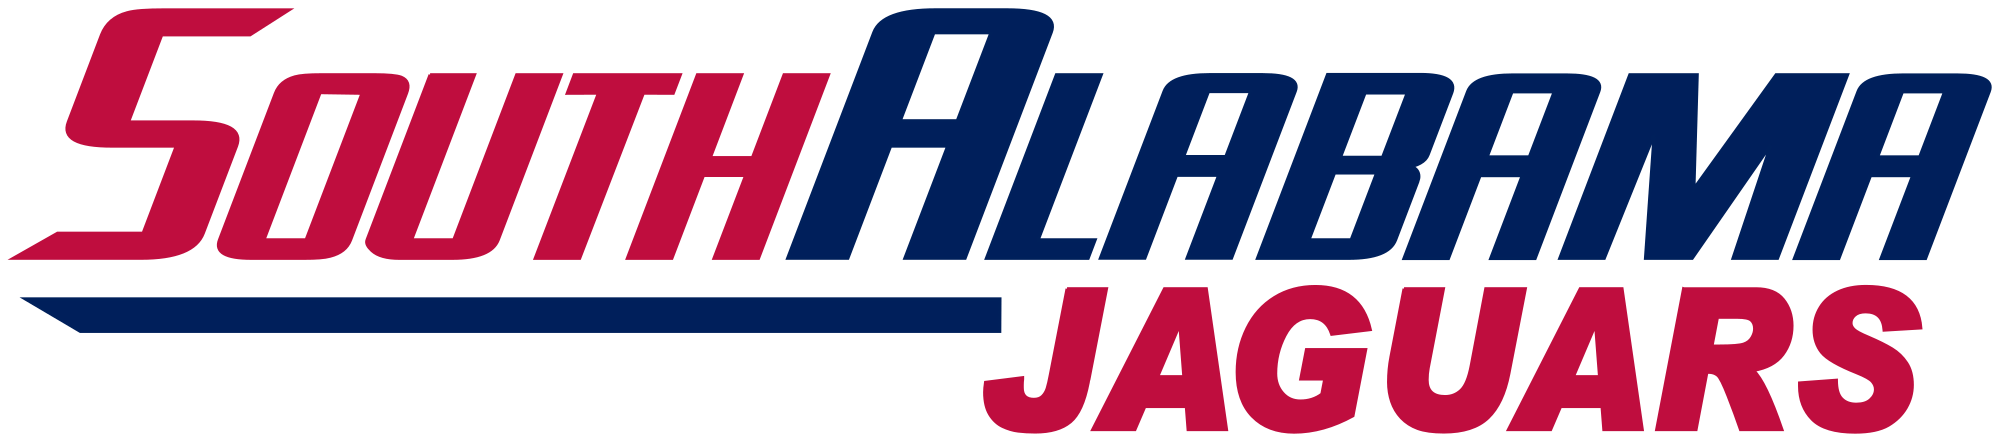 University of South Alabama Logo - File:South Alabama Jaguars wordmark.svg - Wikimedia Commons